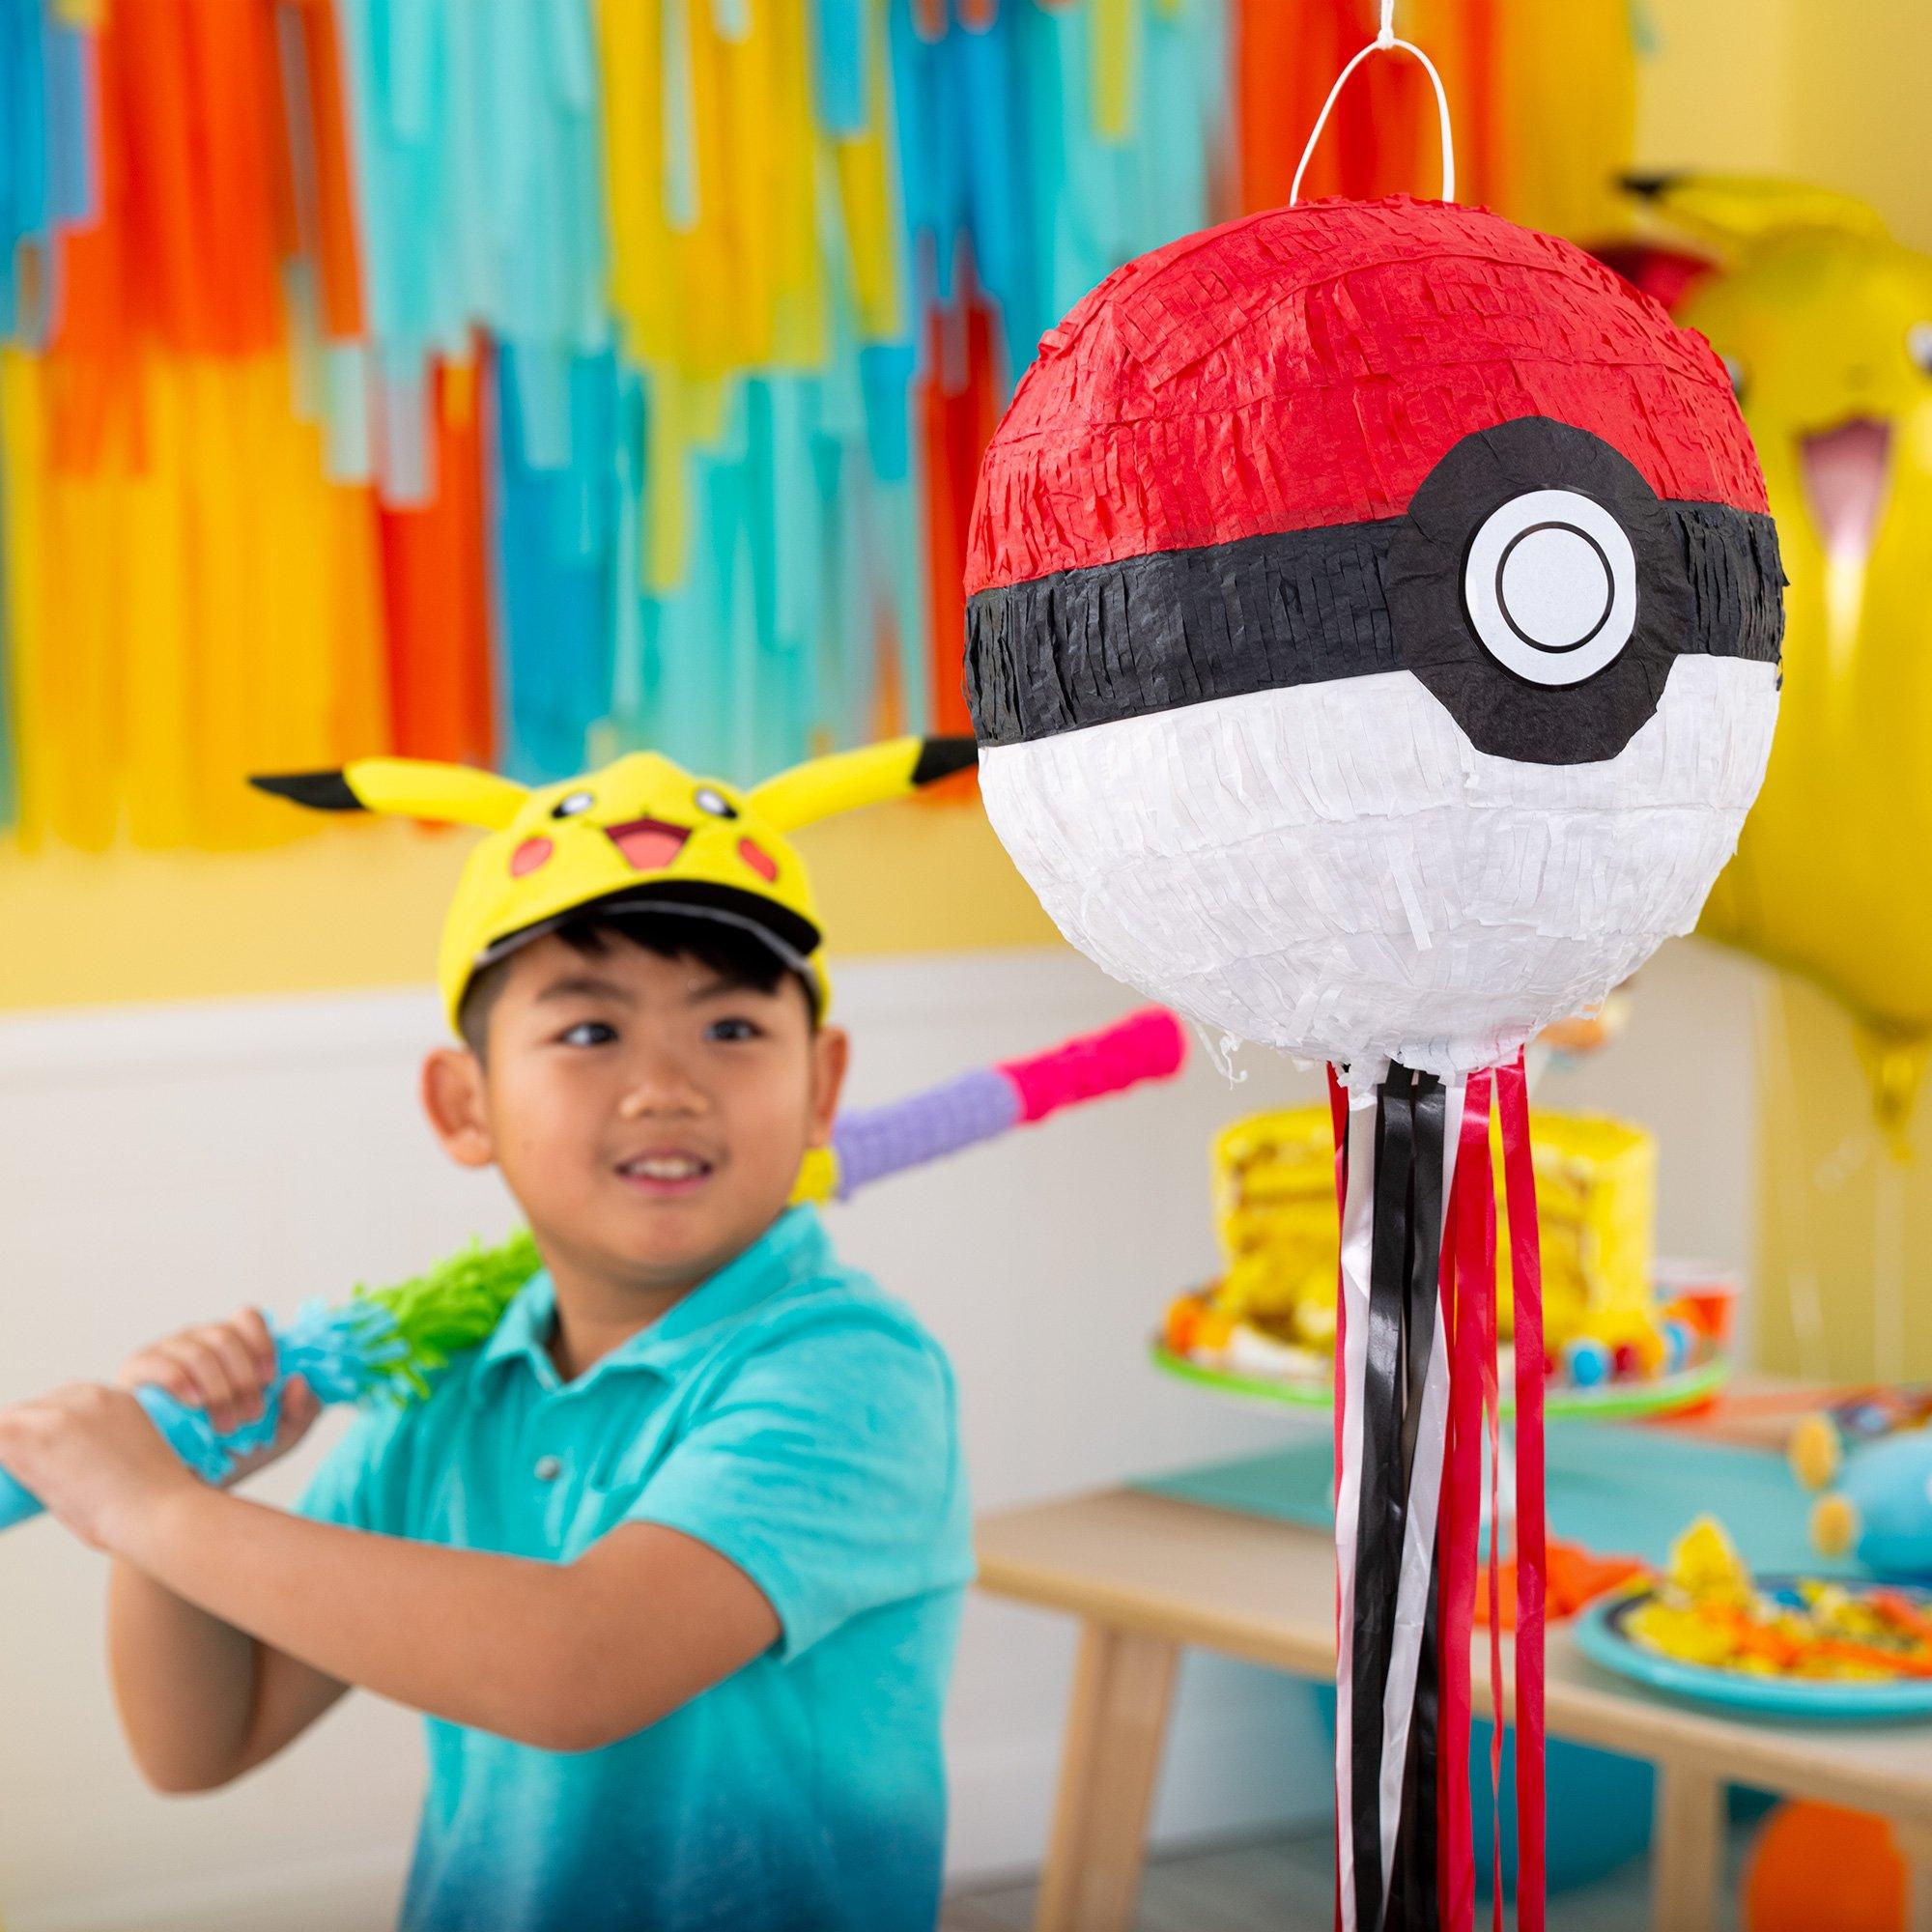 Piñata Pokebola - Pokemon